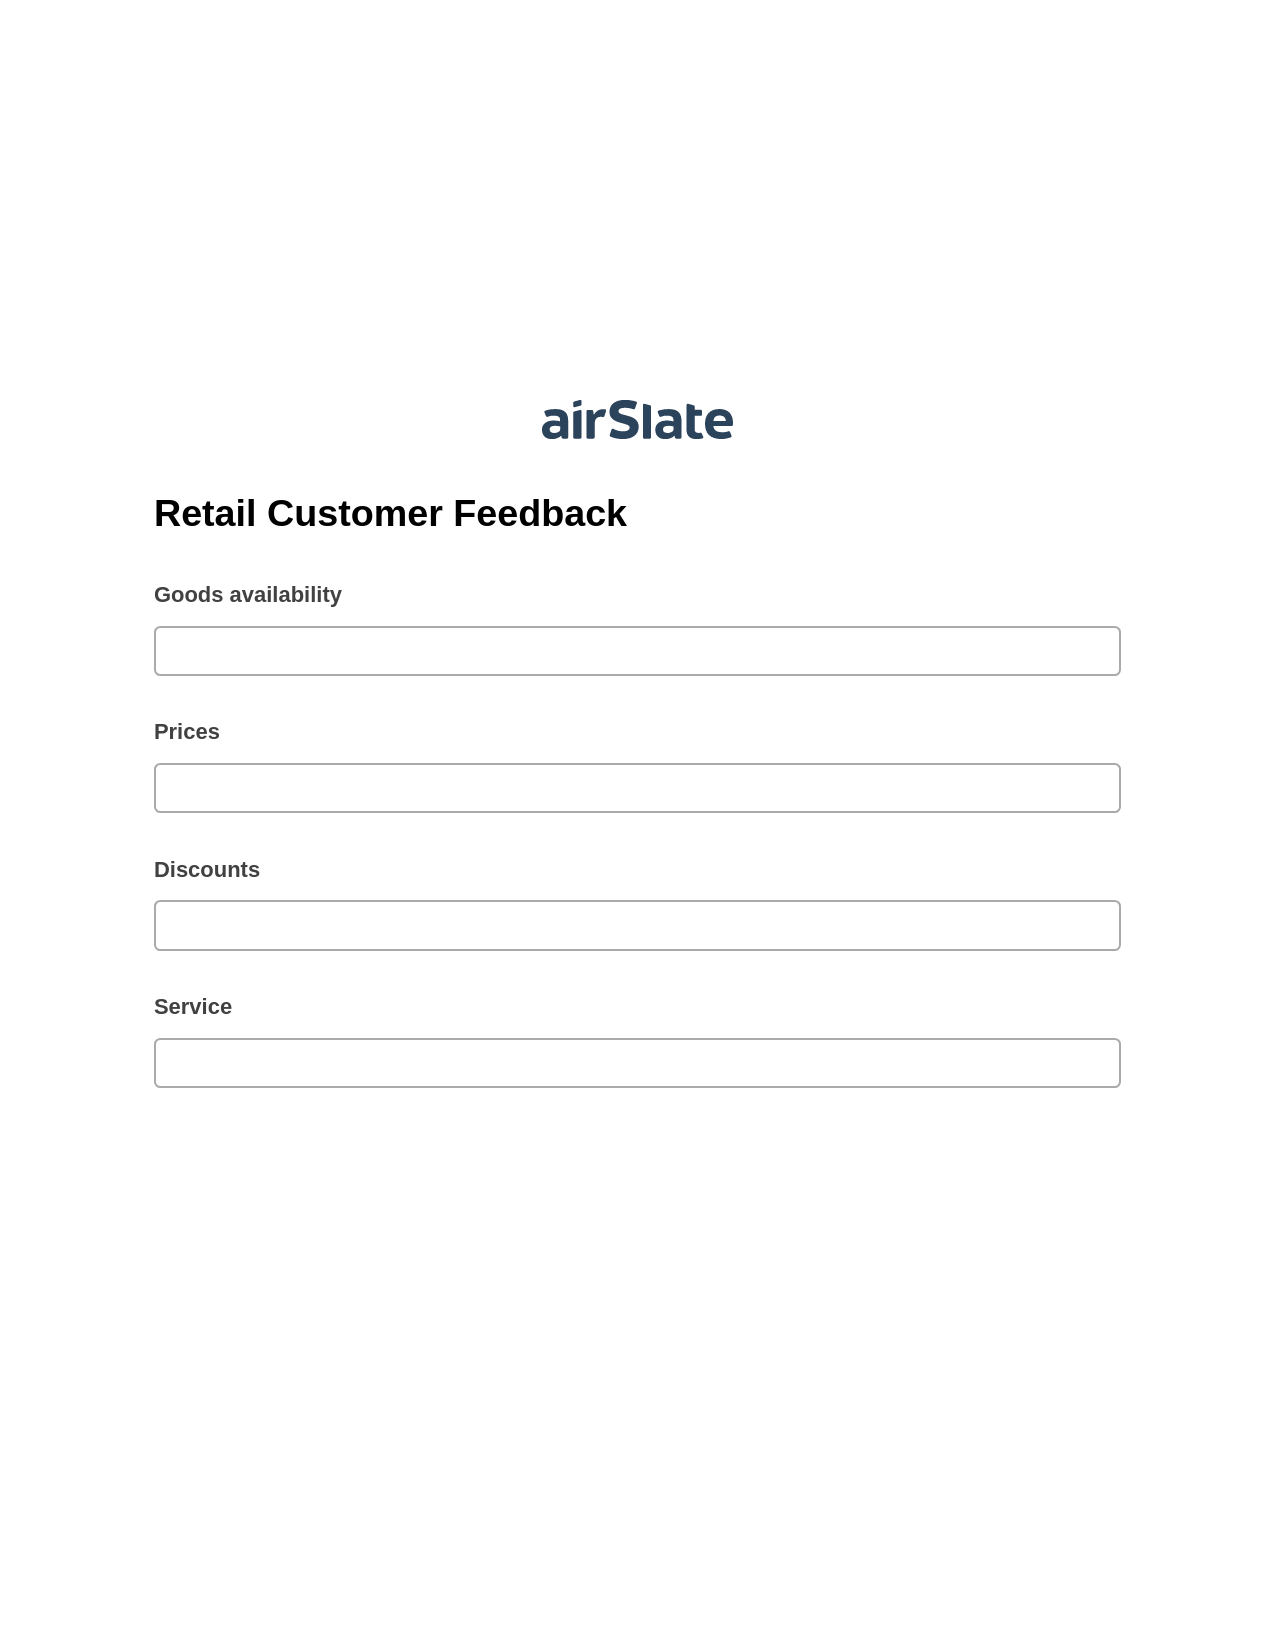 Multirole Retail Customer Feedback Pre-fill from CSV File Bot, Create slate bot, Export to Google Sheet Bot